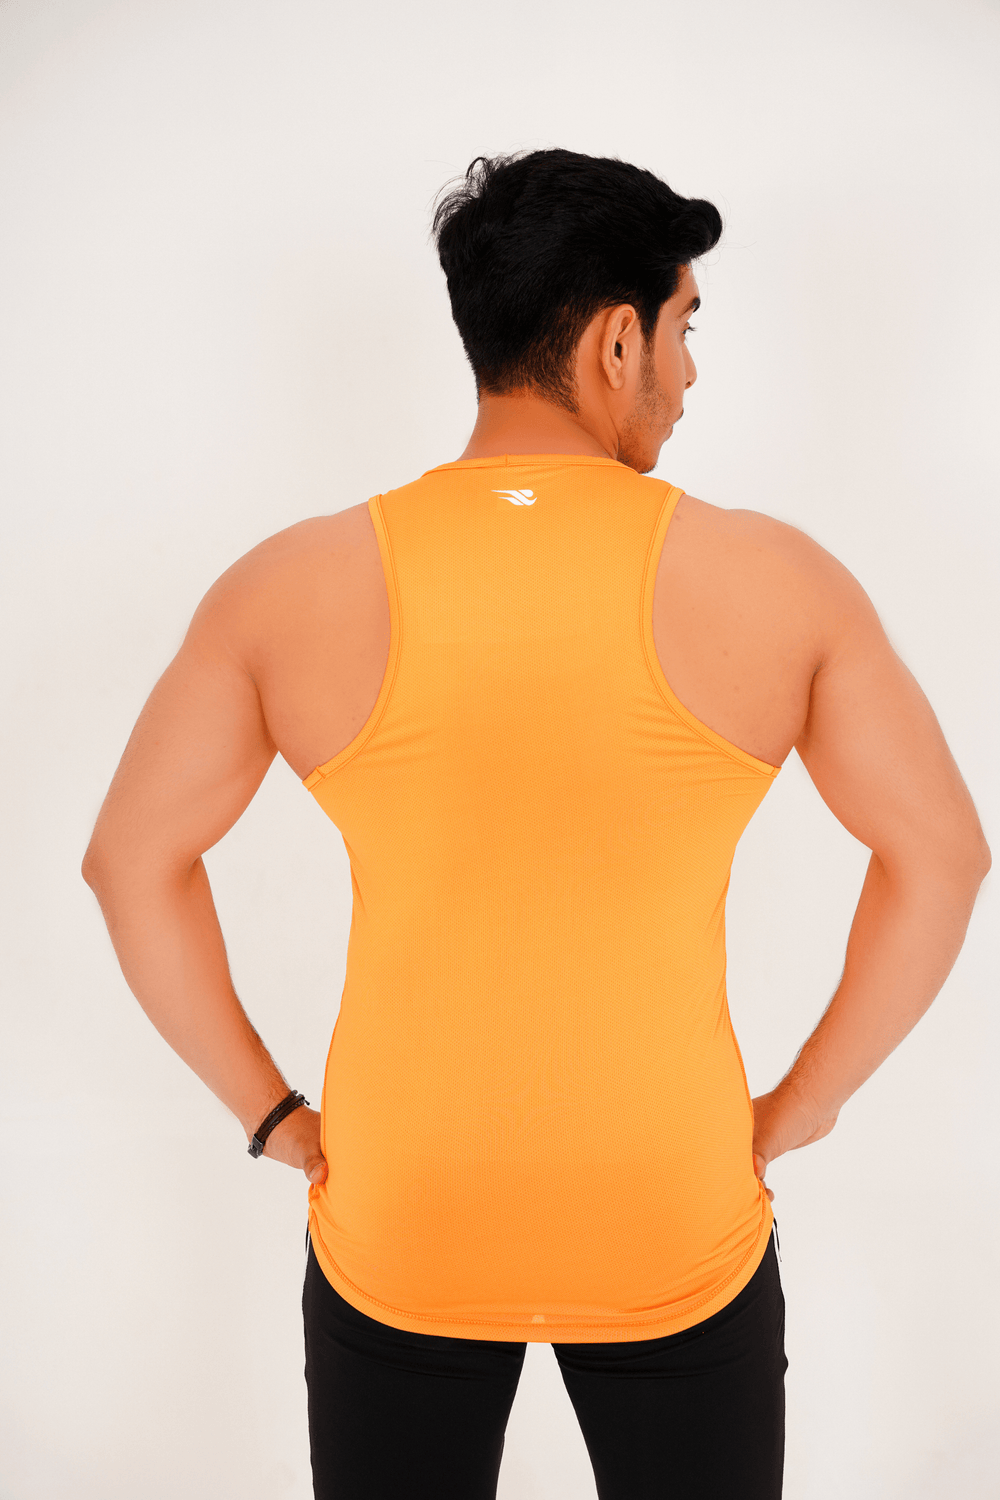 PerformanceFlex Men's Tank Top-Orange - GYMRUN Activewear